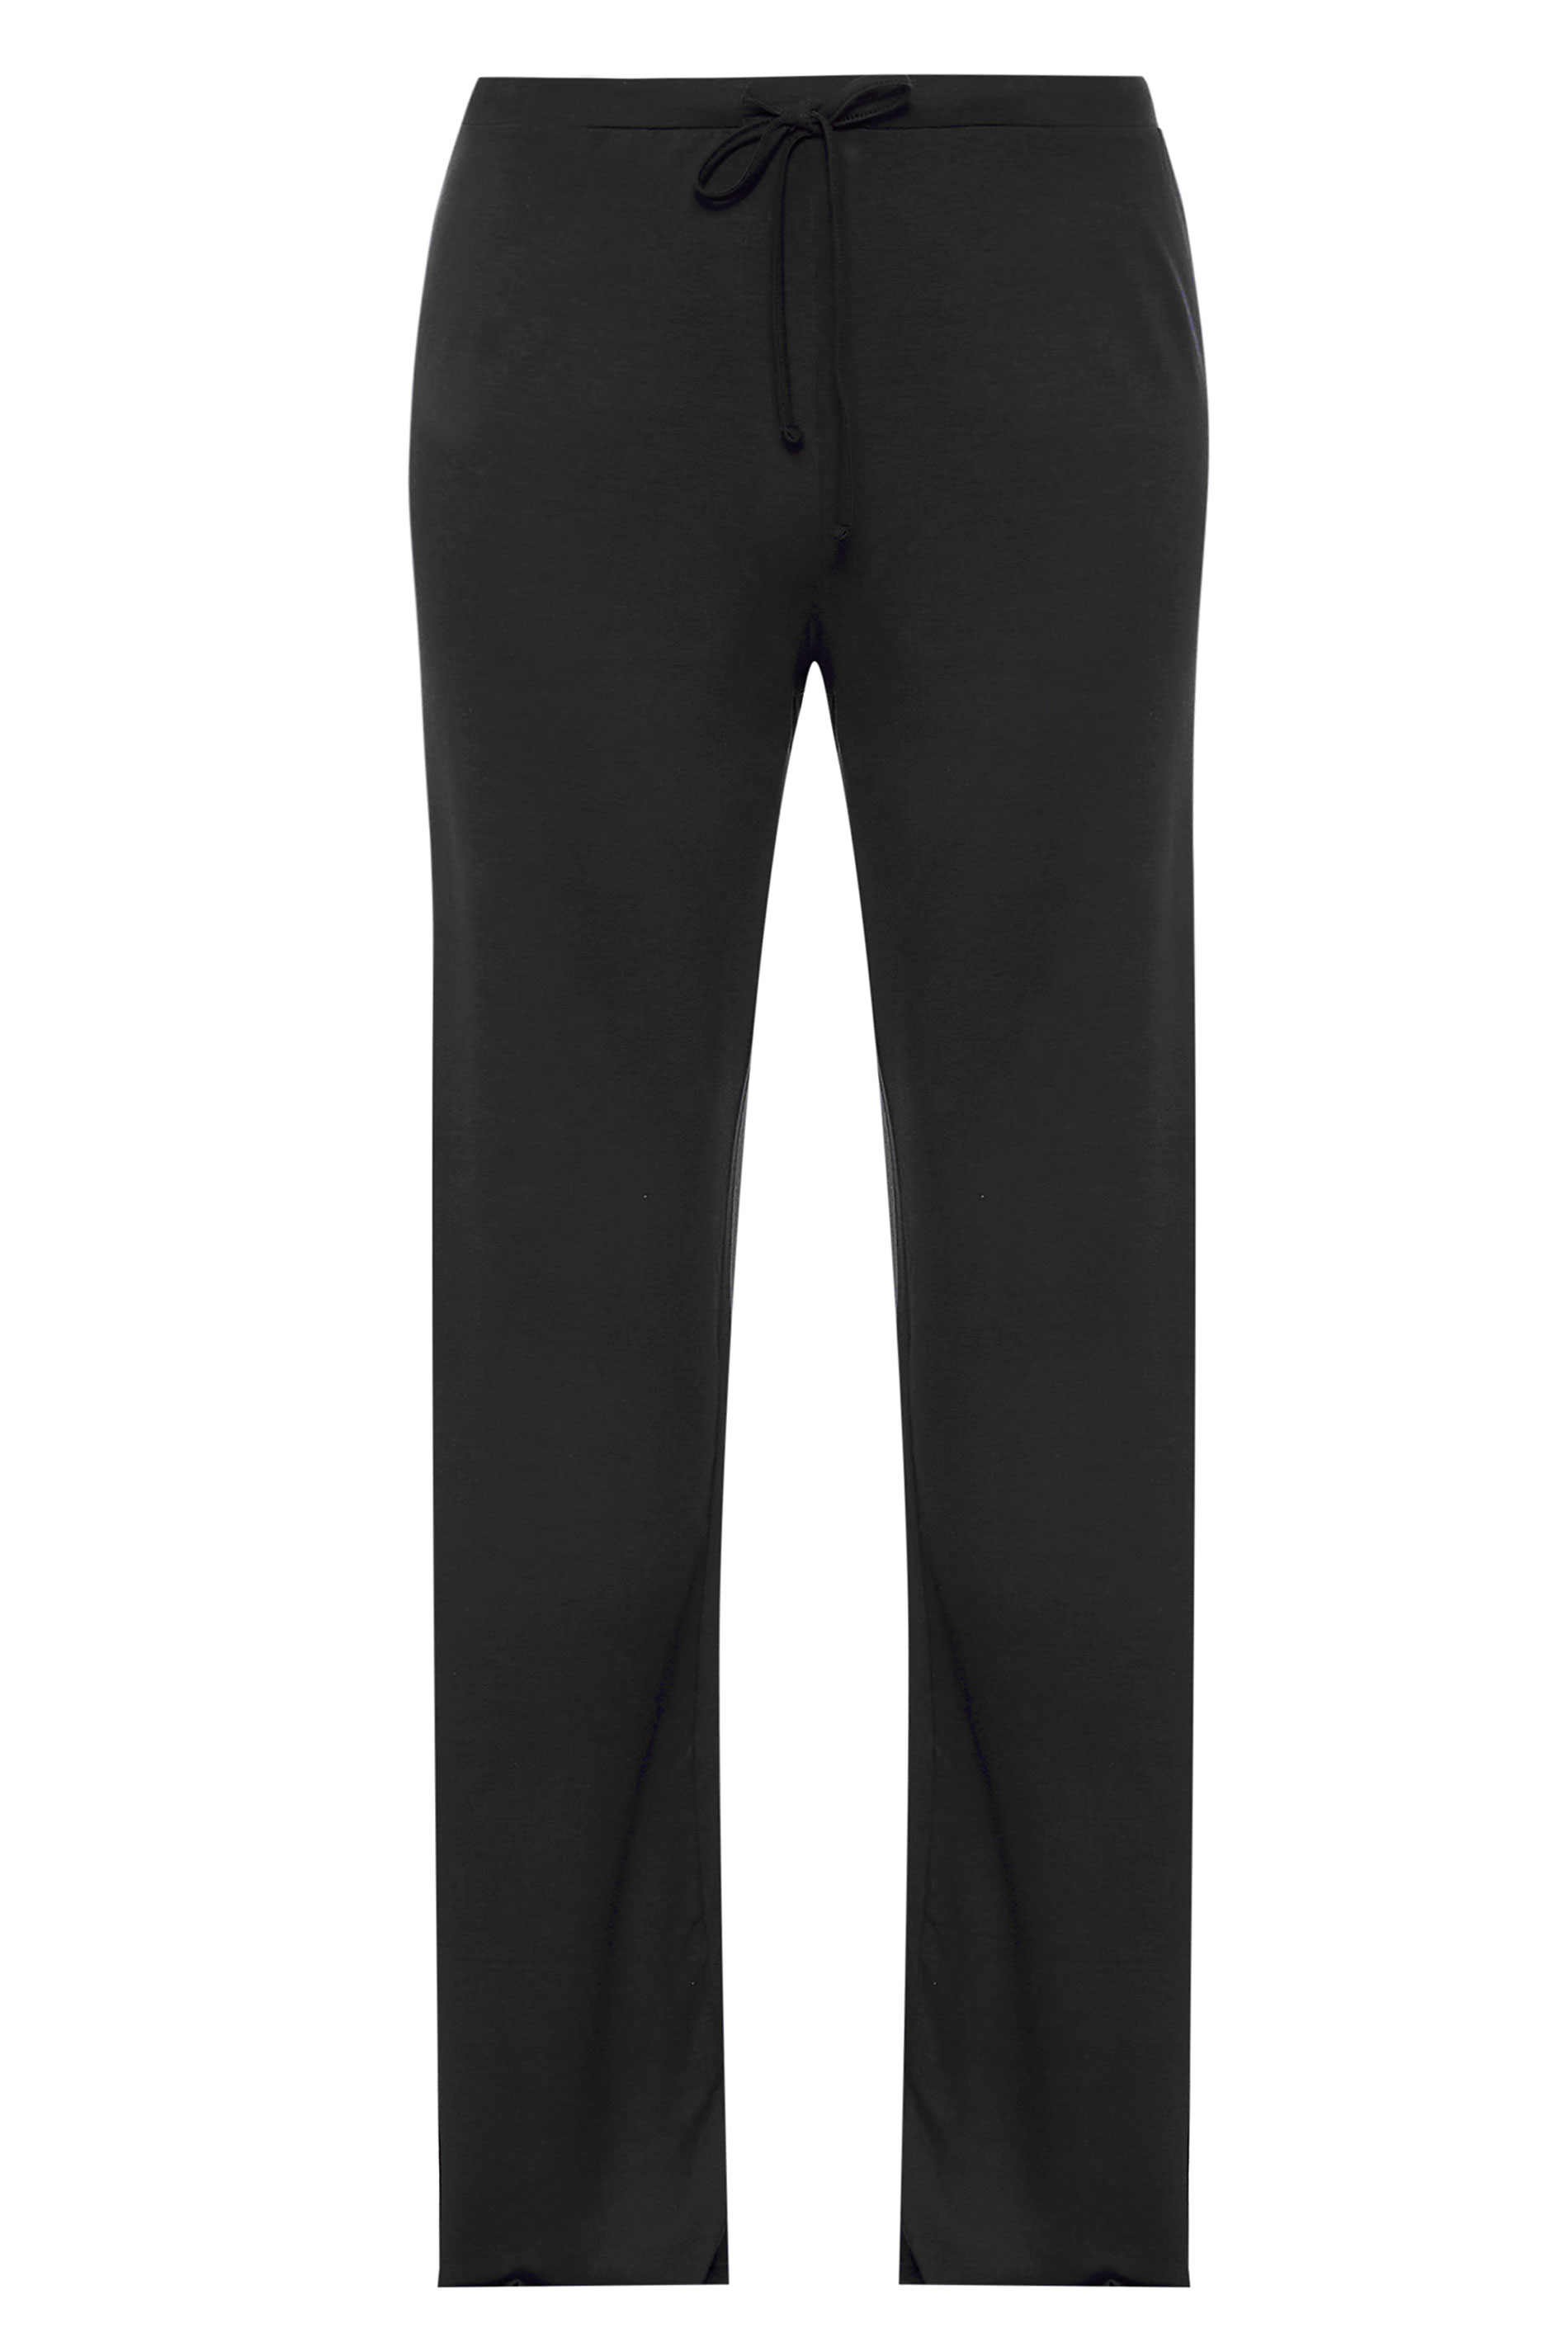 LTS Black Yoga Pants | Long Tall Sally